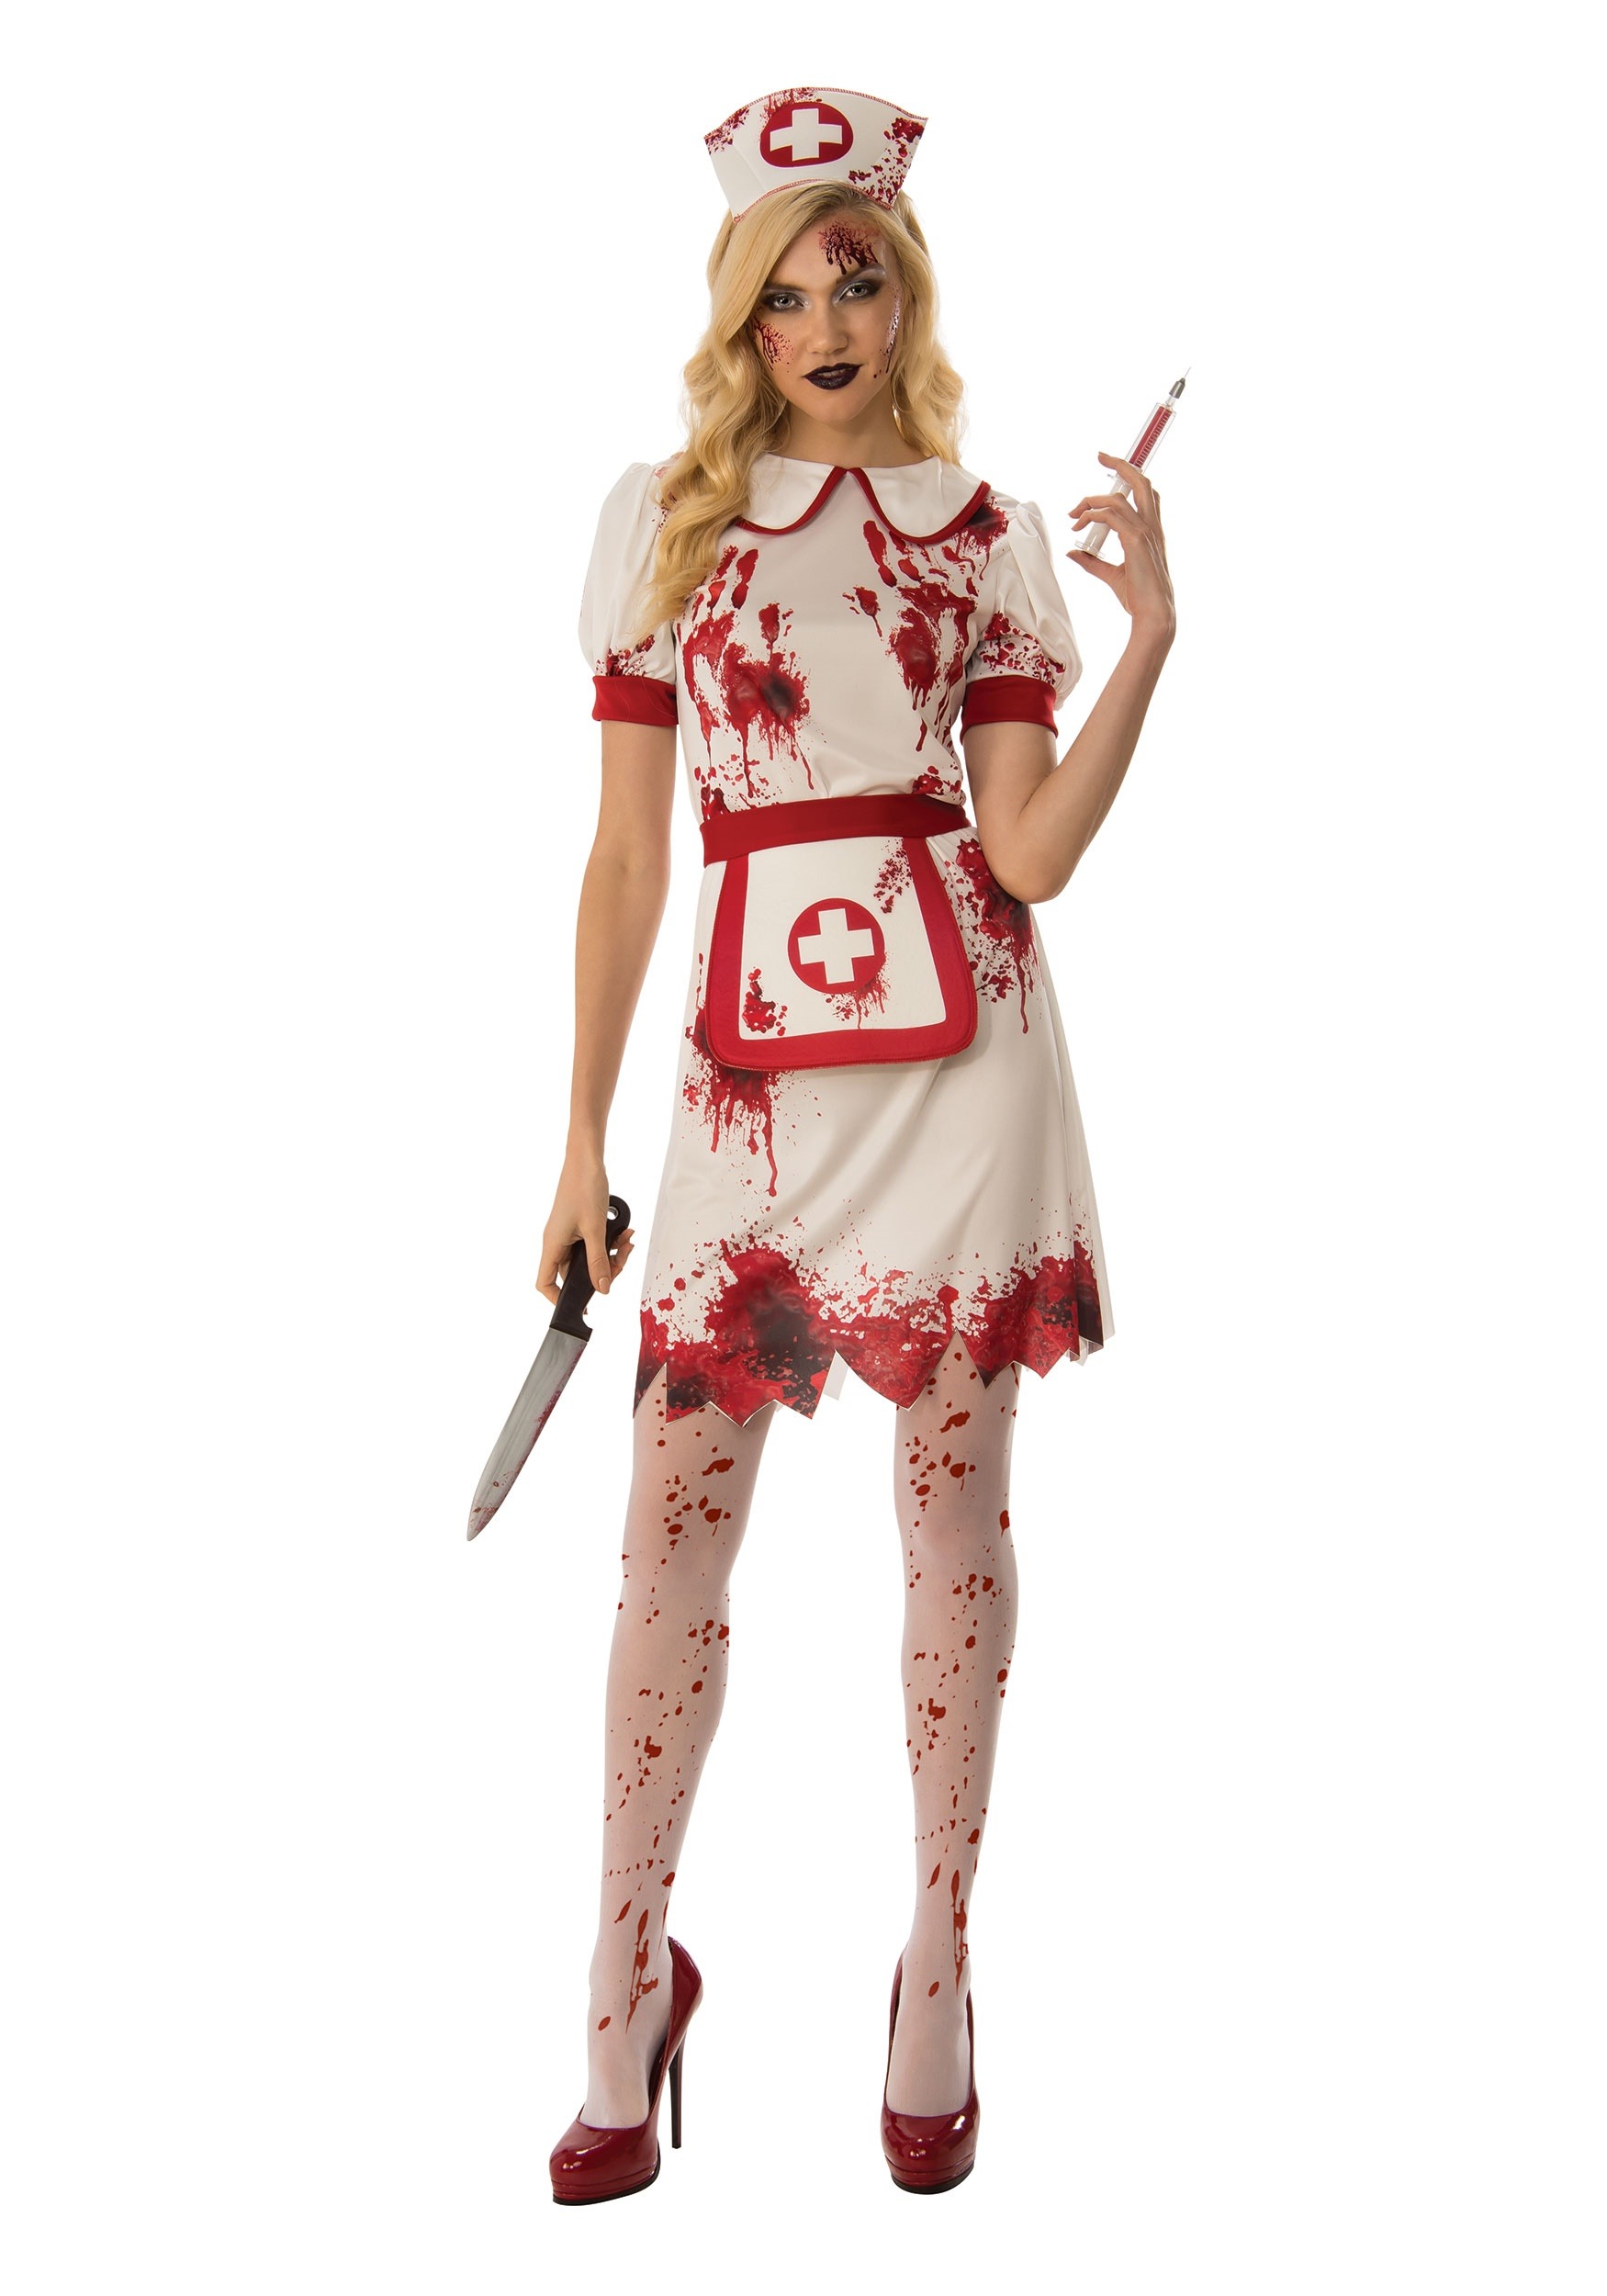 Photos - Fancy Dress Rubies Costume Co. Inc Women's Bloody Nurse Costume Dress Red/White RU 